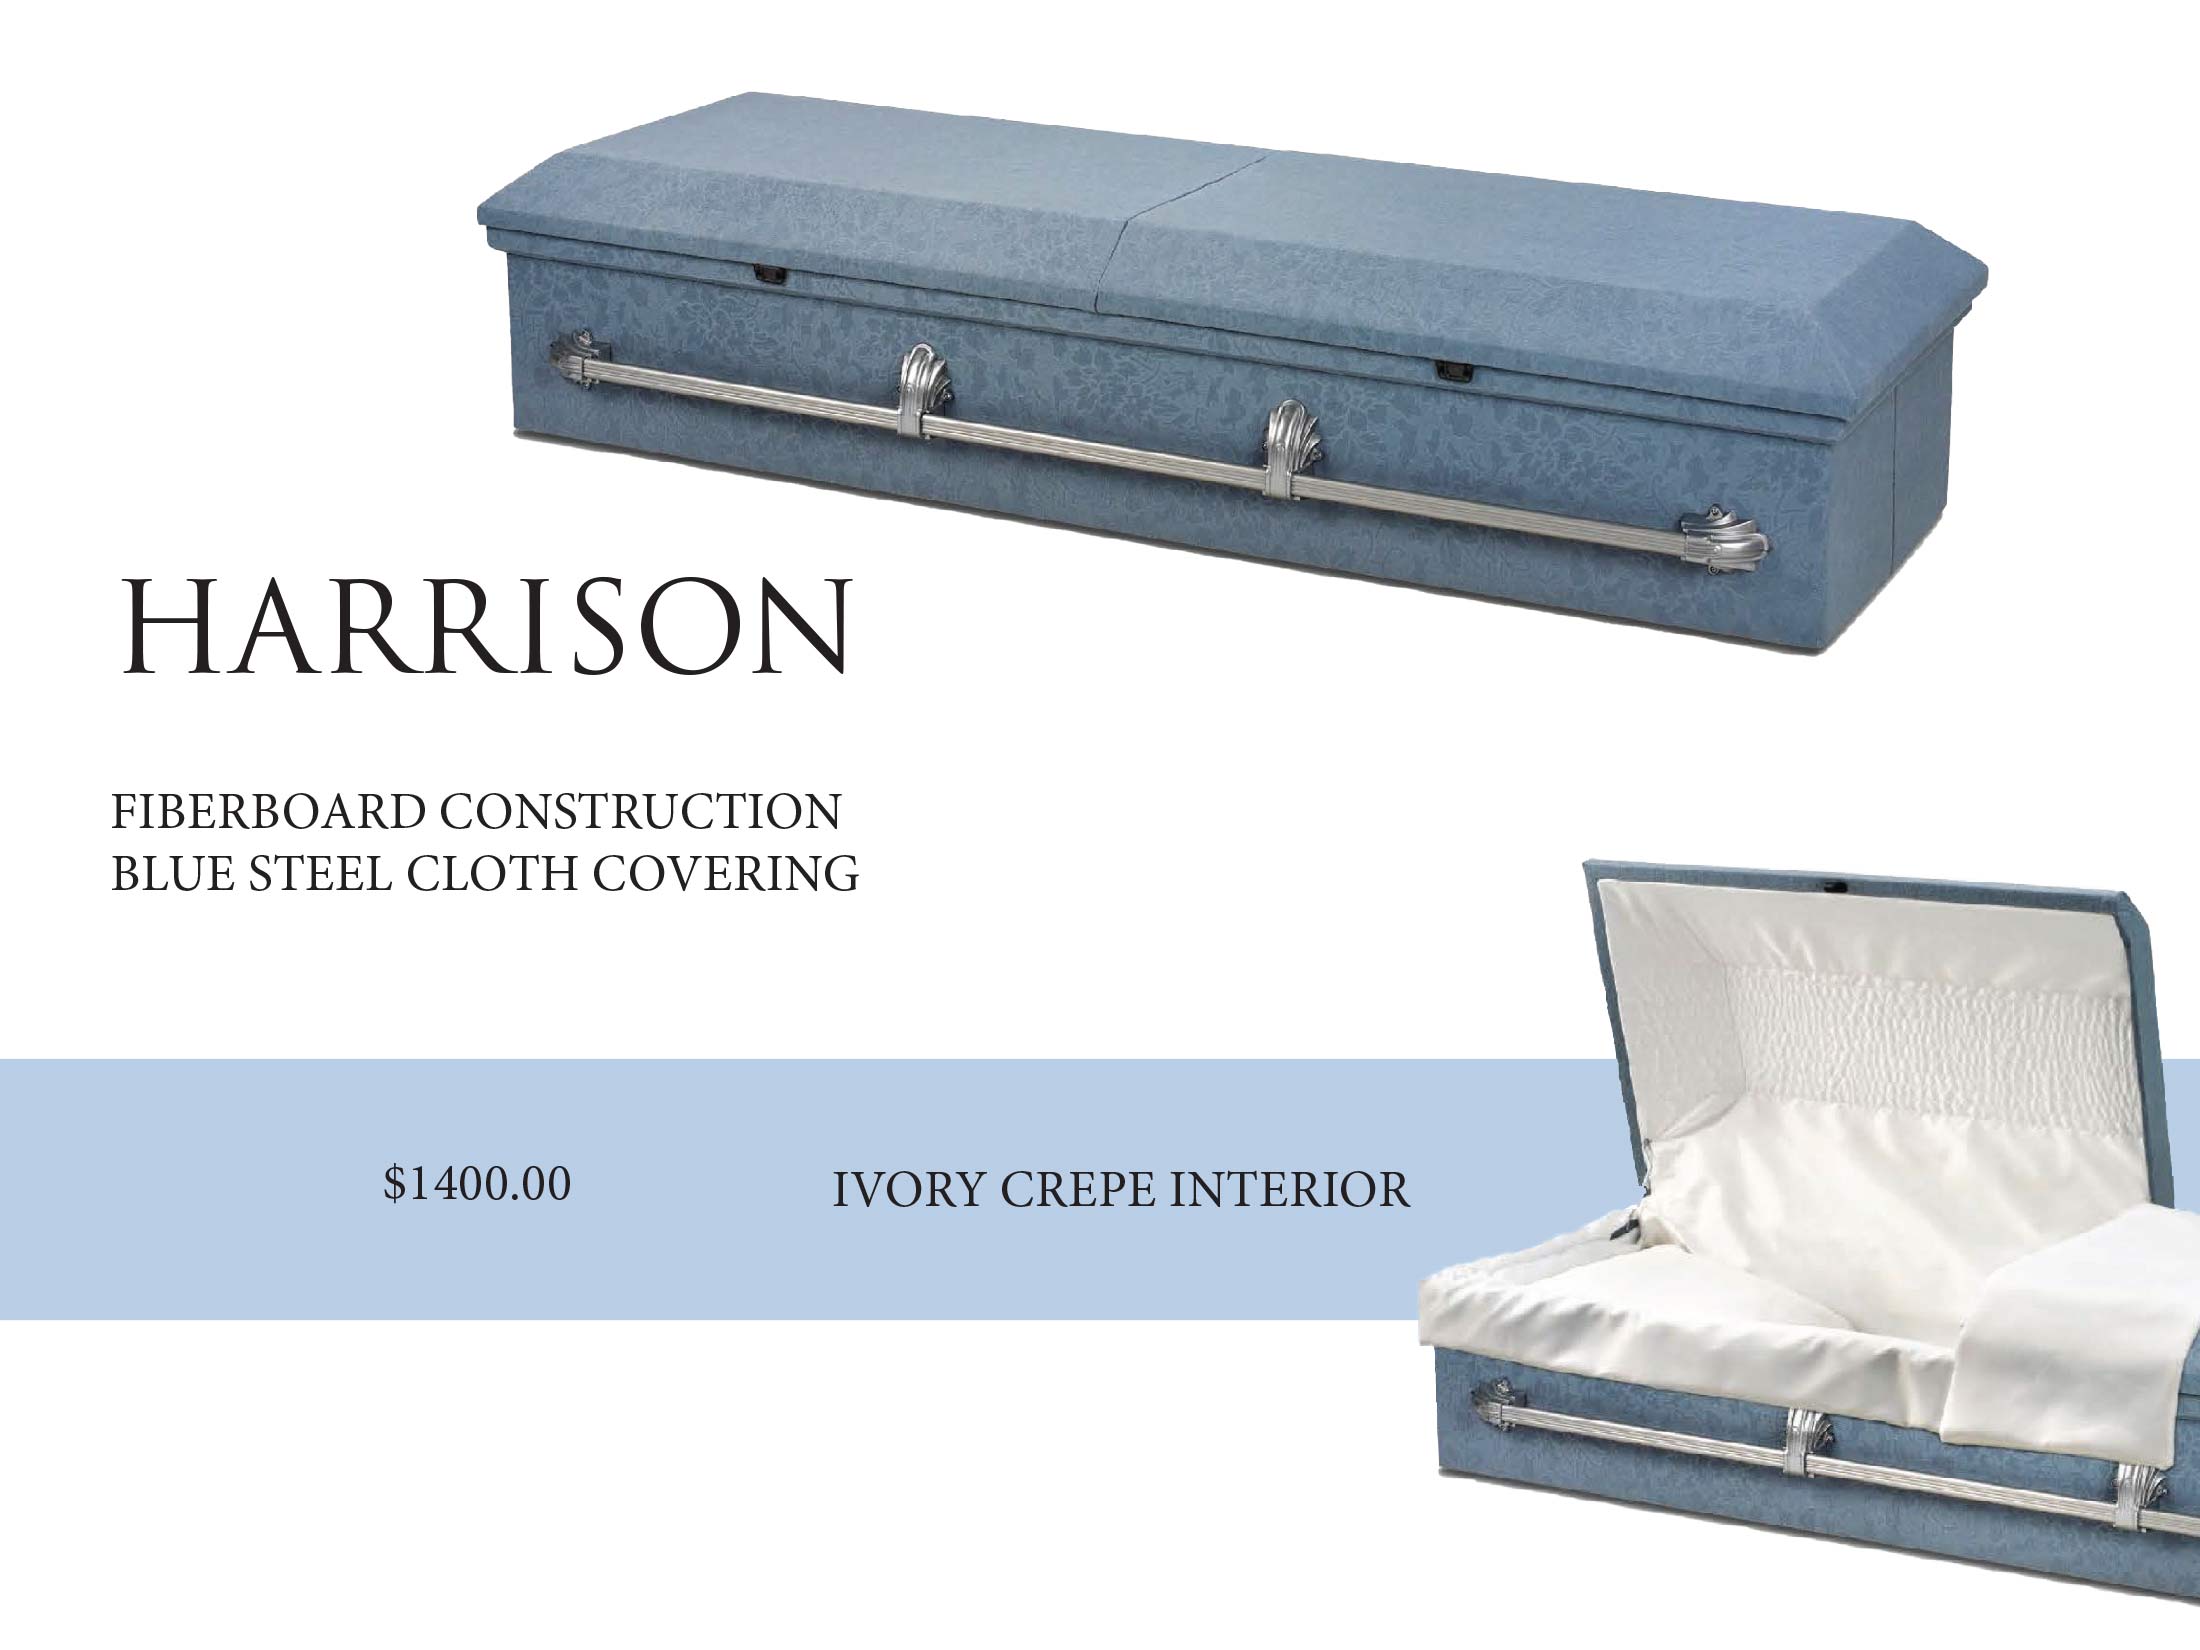 Harrison - Fiberboard Construction Blue Steel Cloth Covering - $1400.00 - Ivory Crepe Interior